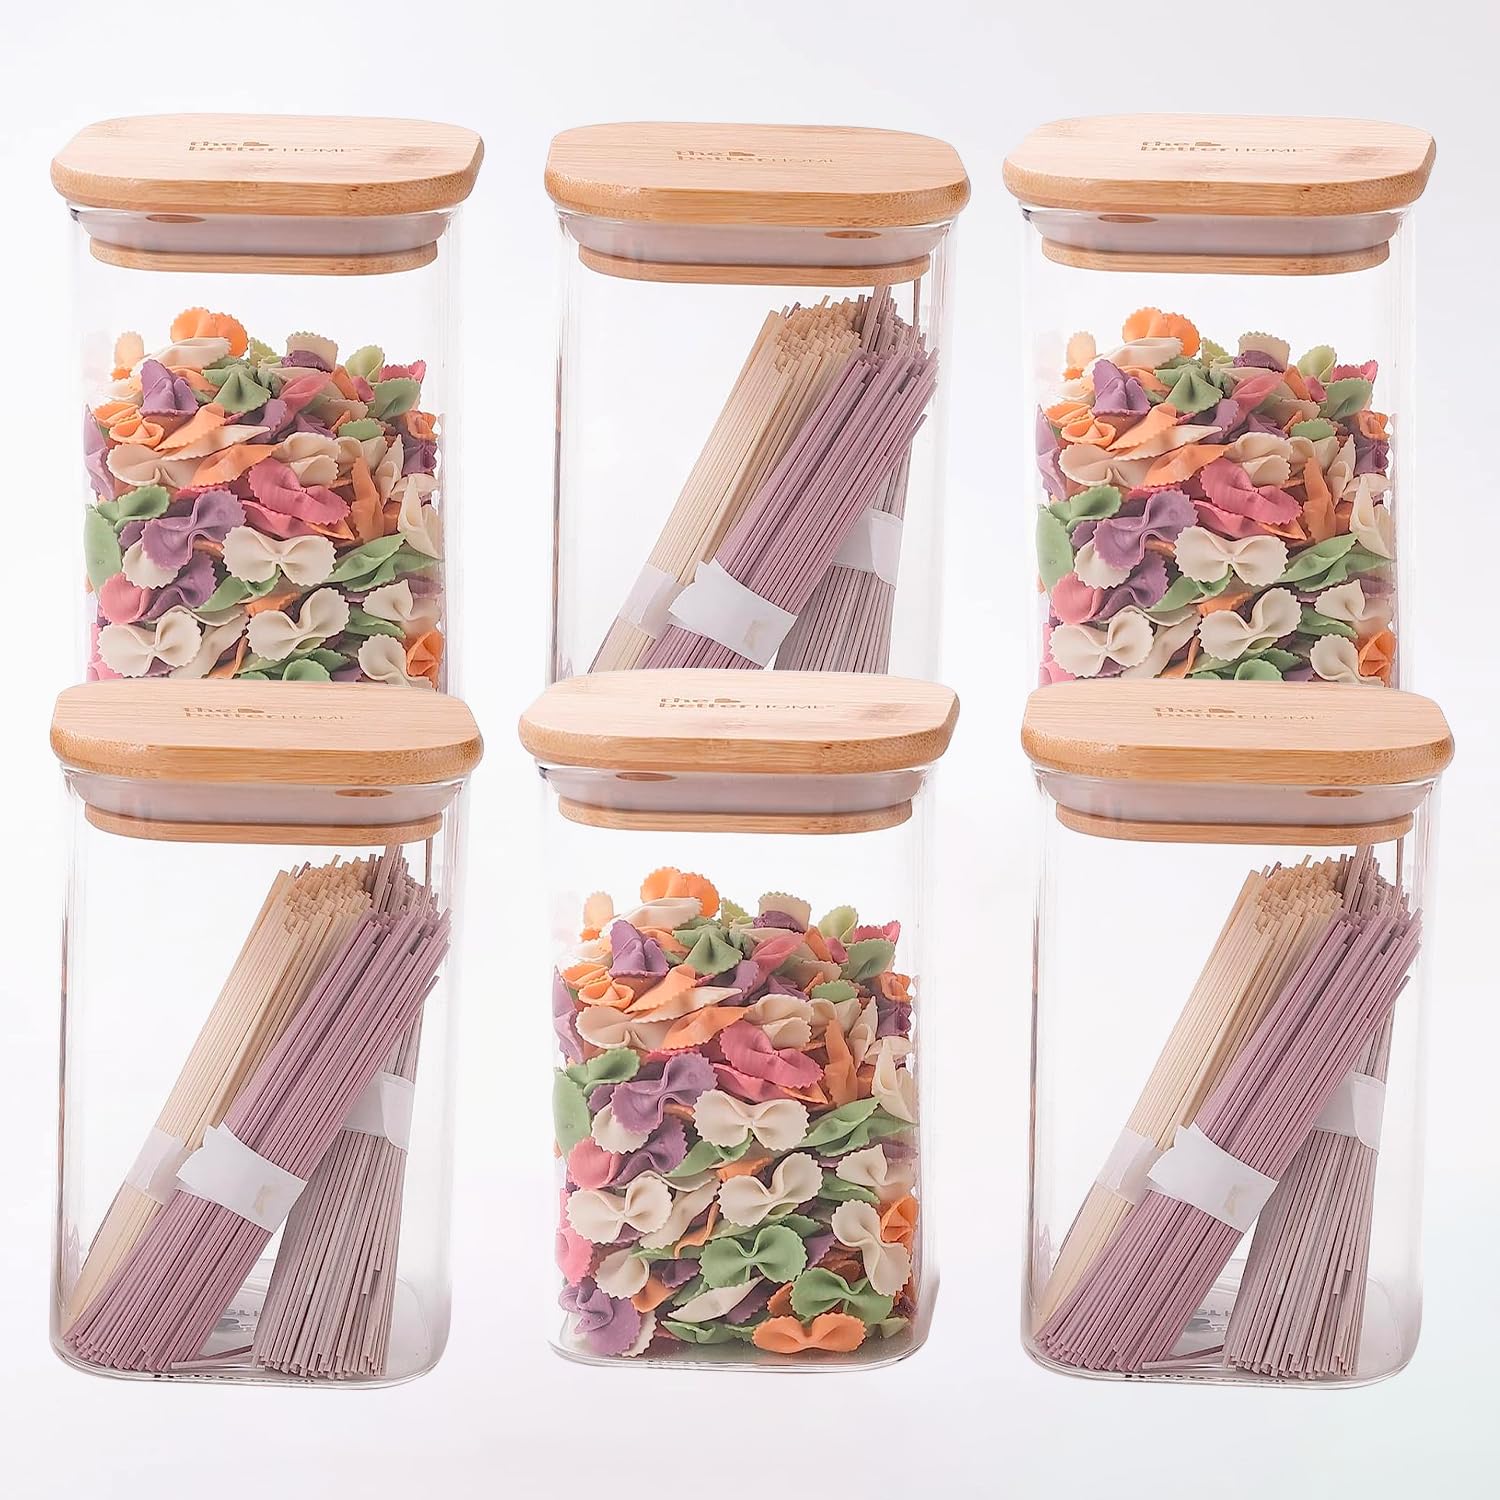 The Better Home Borosilicate Glass Jar for Kitchen Storage